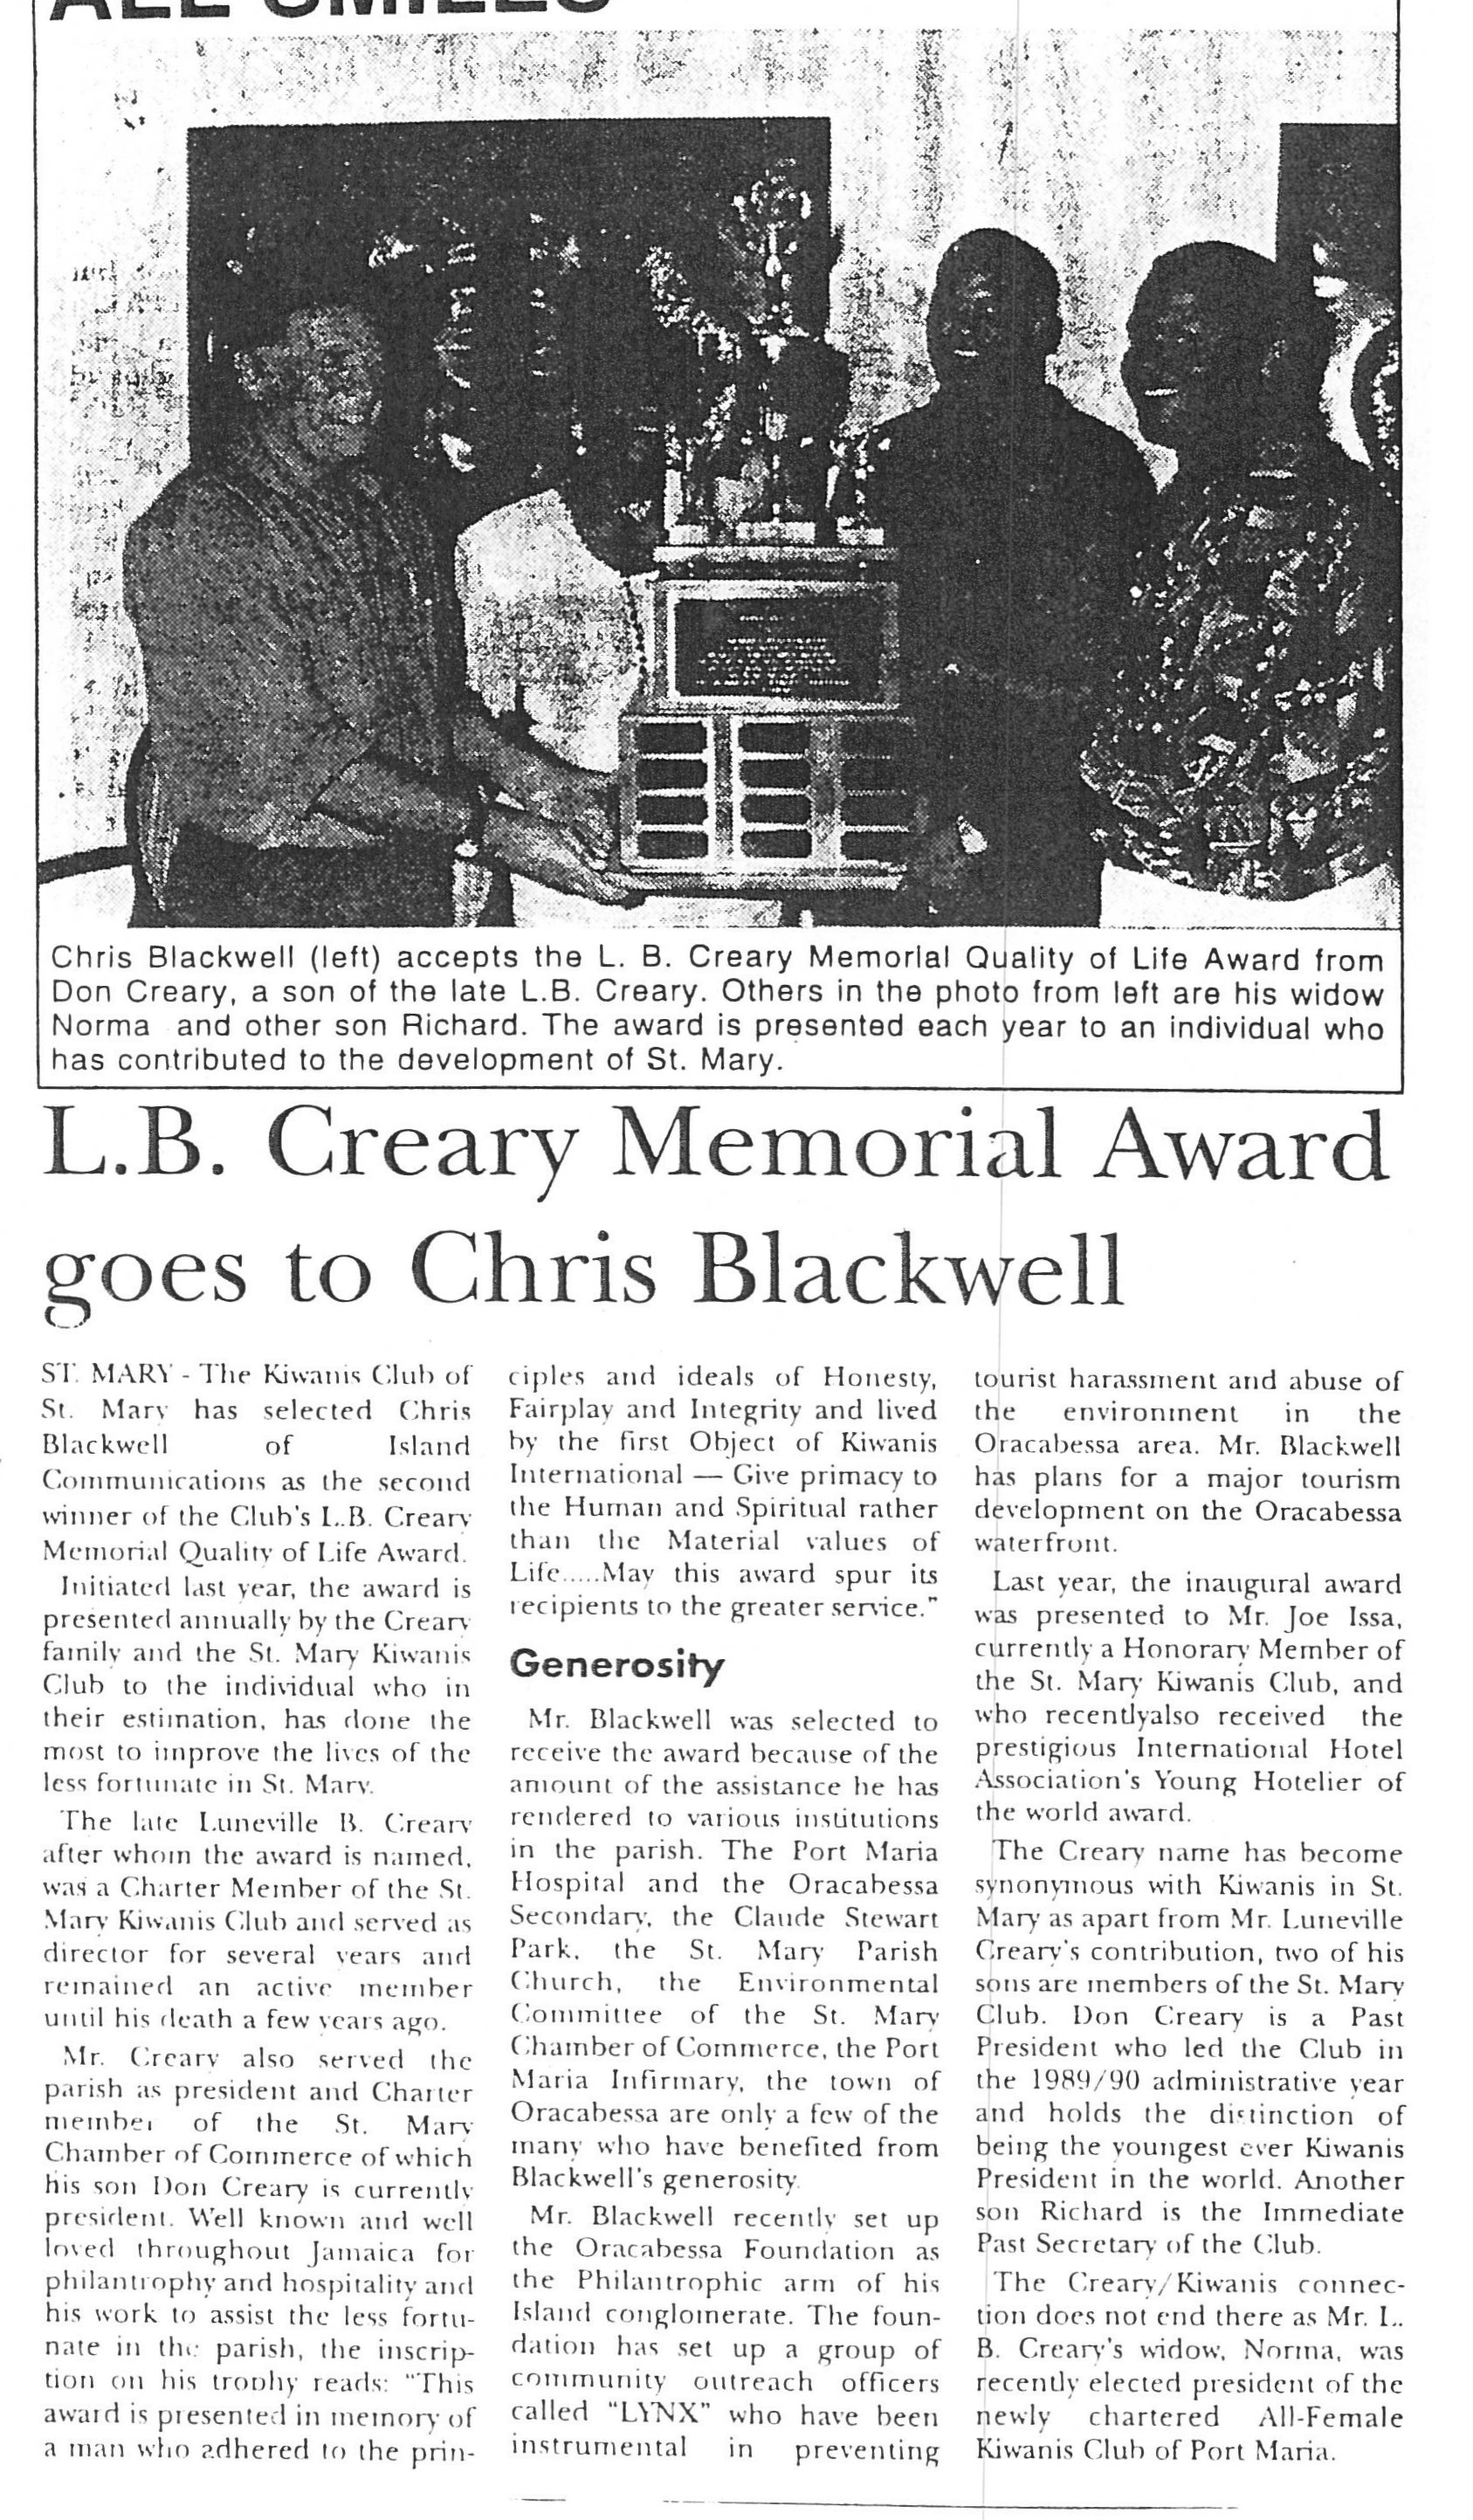 L.B Creary Memorial Award goes to Chris Blackwell